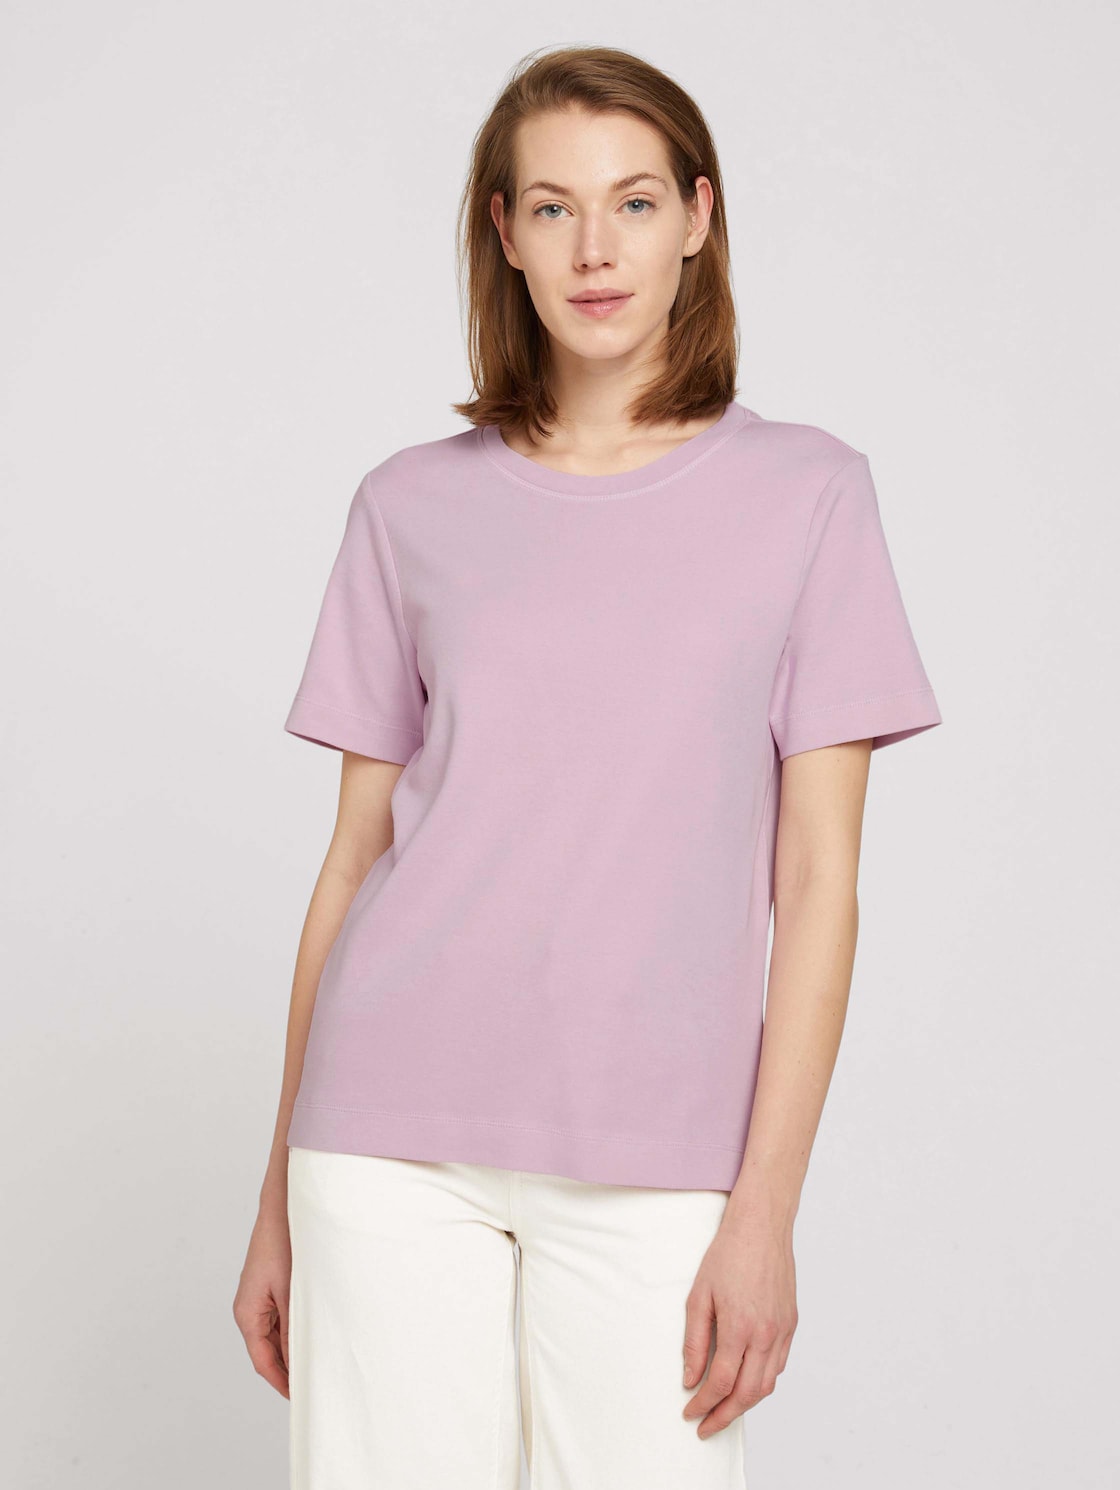 TOM TAILOR Damen Basic T-Shirt, lila, Gr. XXL, baumwolle